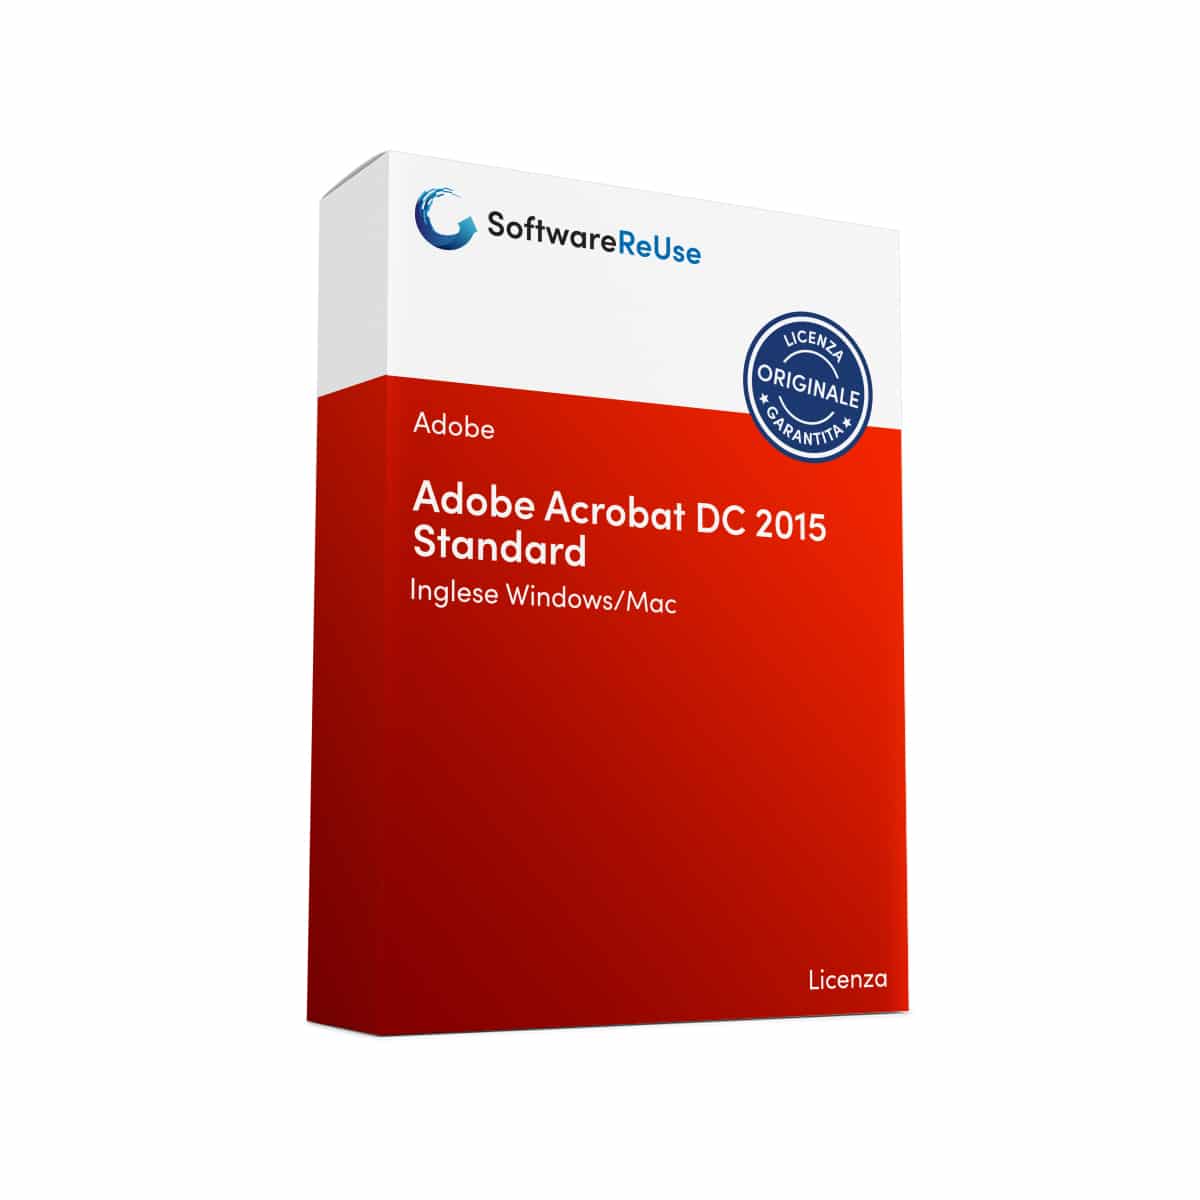 Adobe Acrobat DC 2015 Standard 3